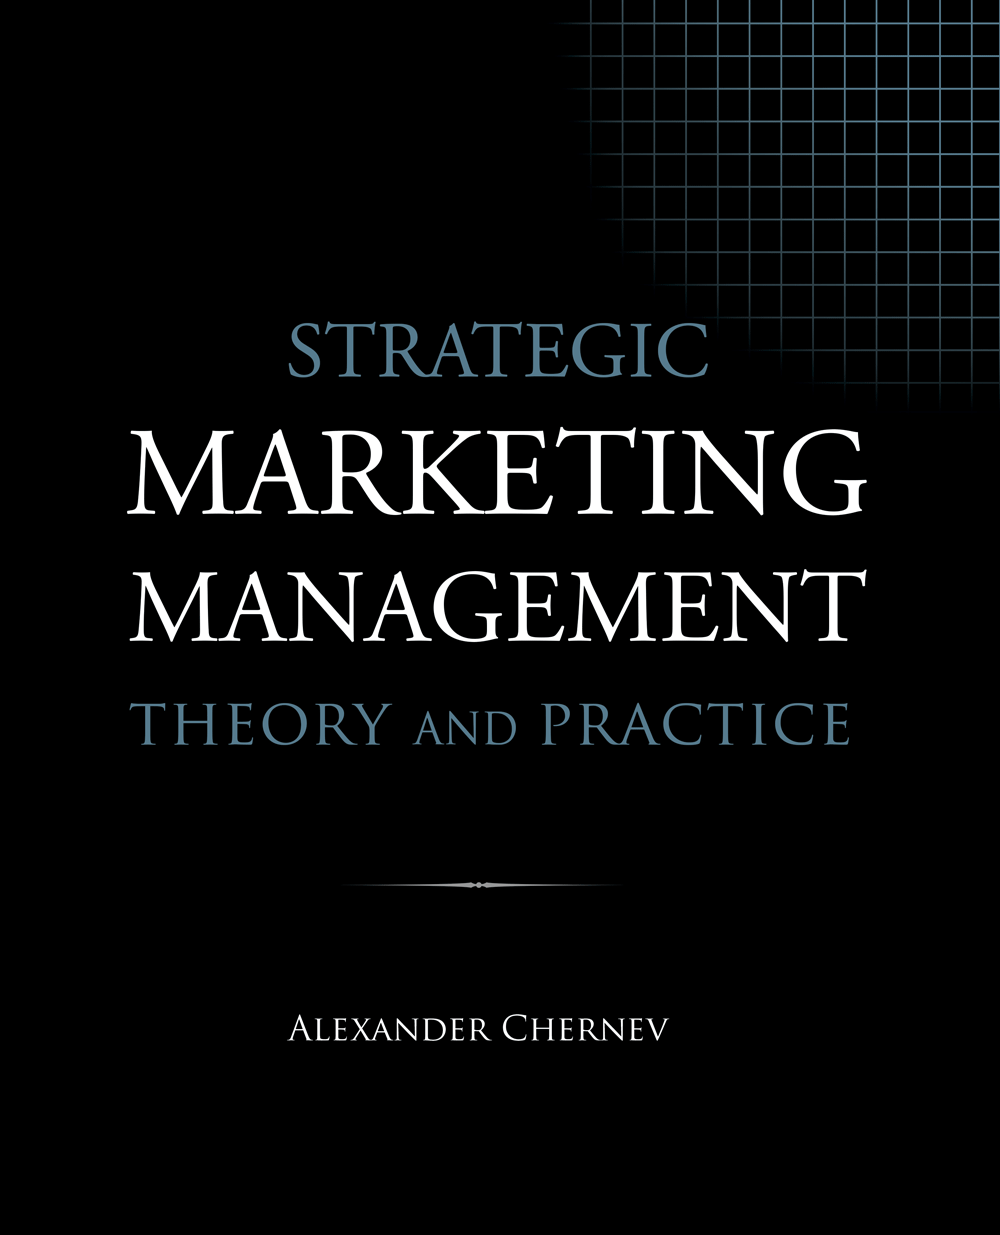 Marketing books